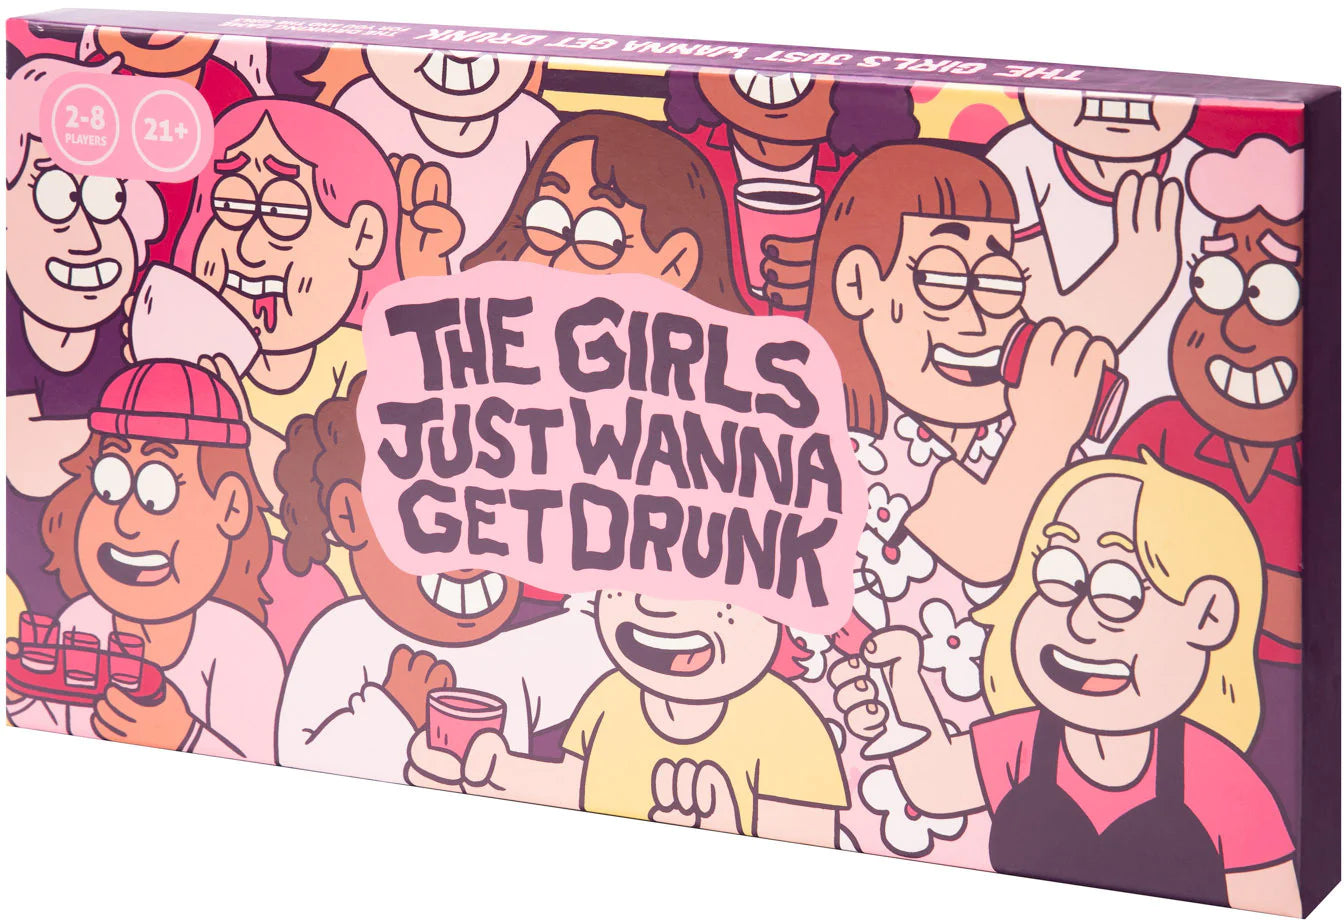 The Girls Just Wanna Get Drunk